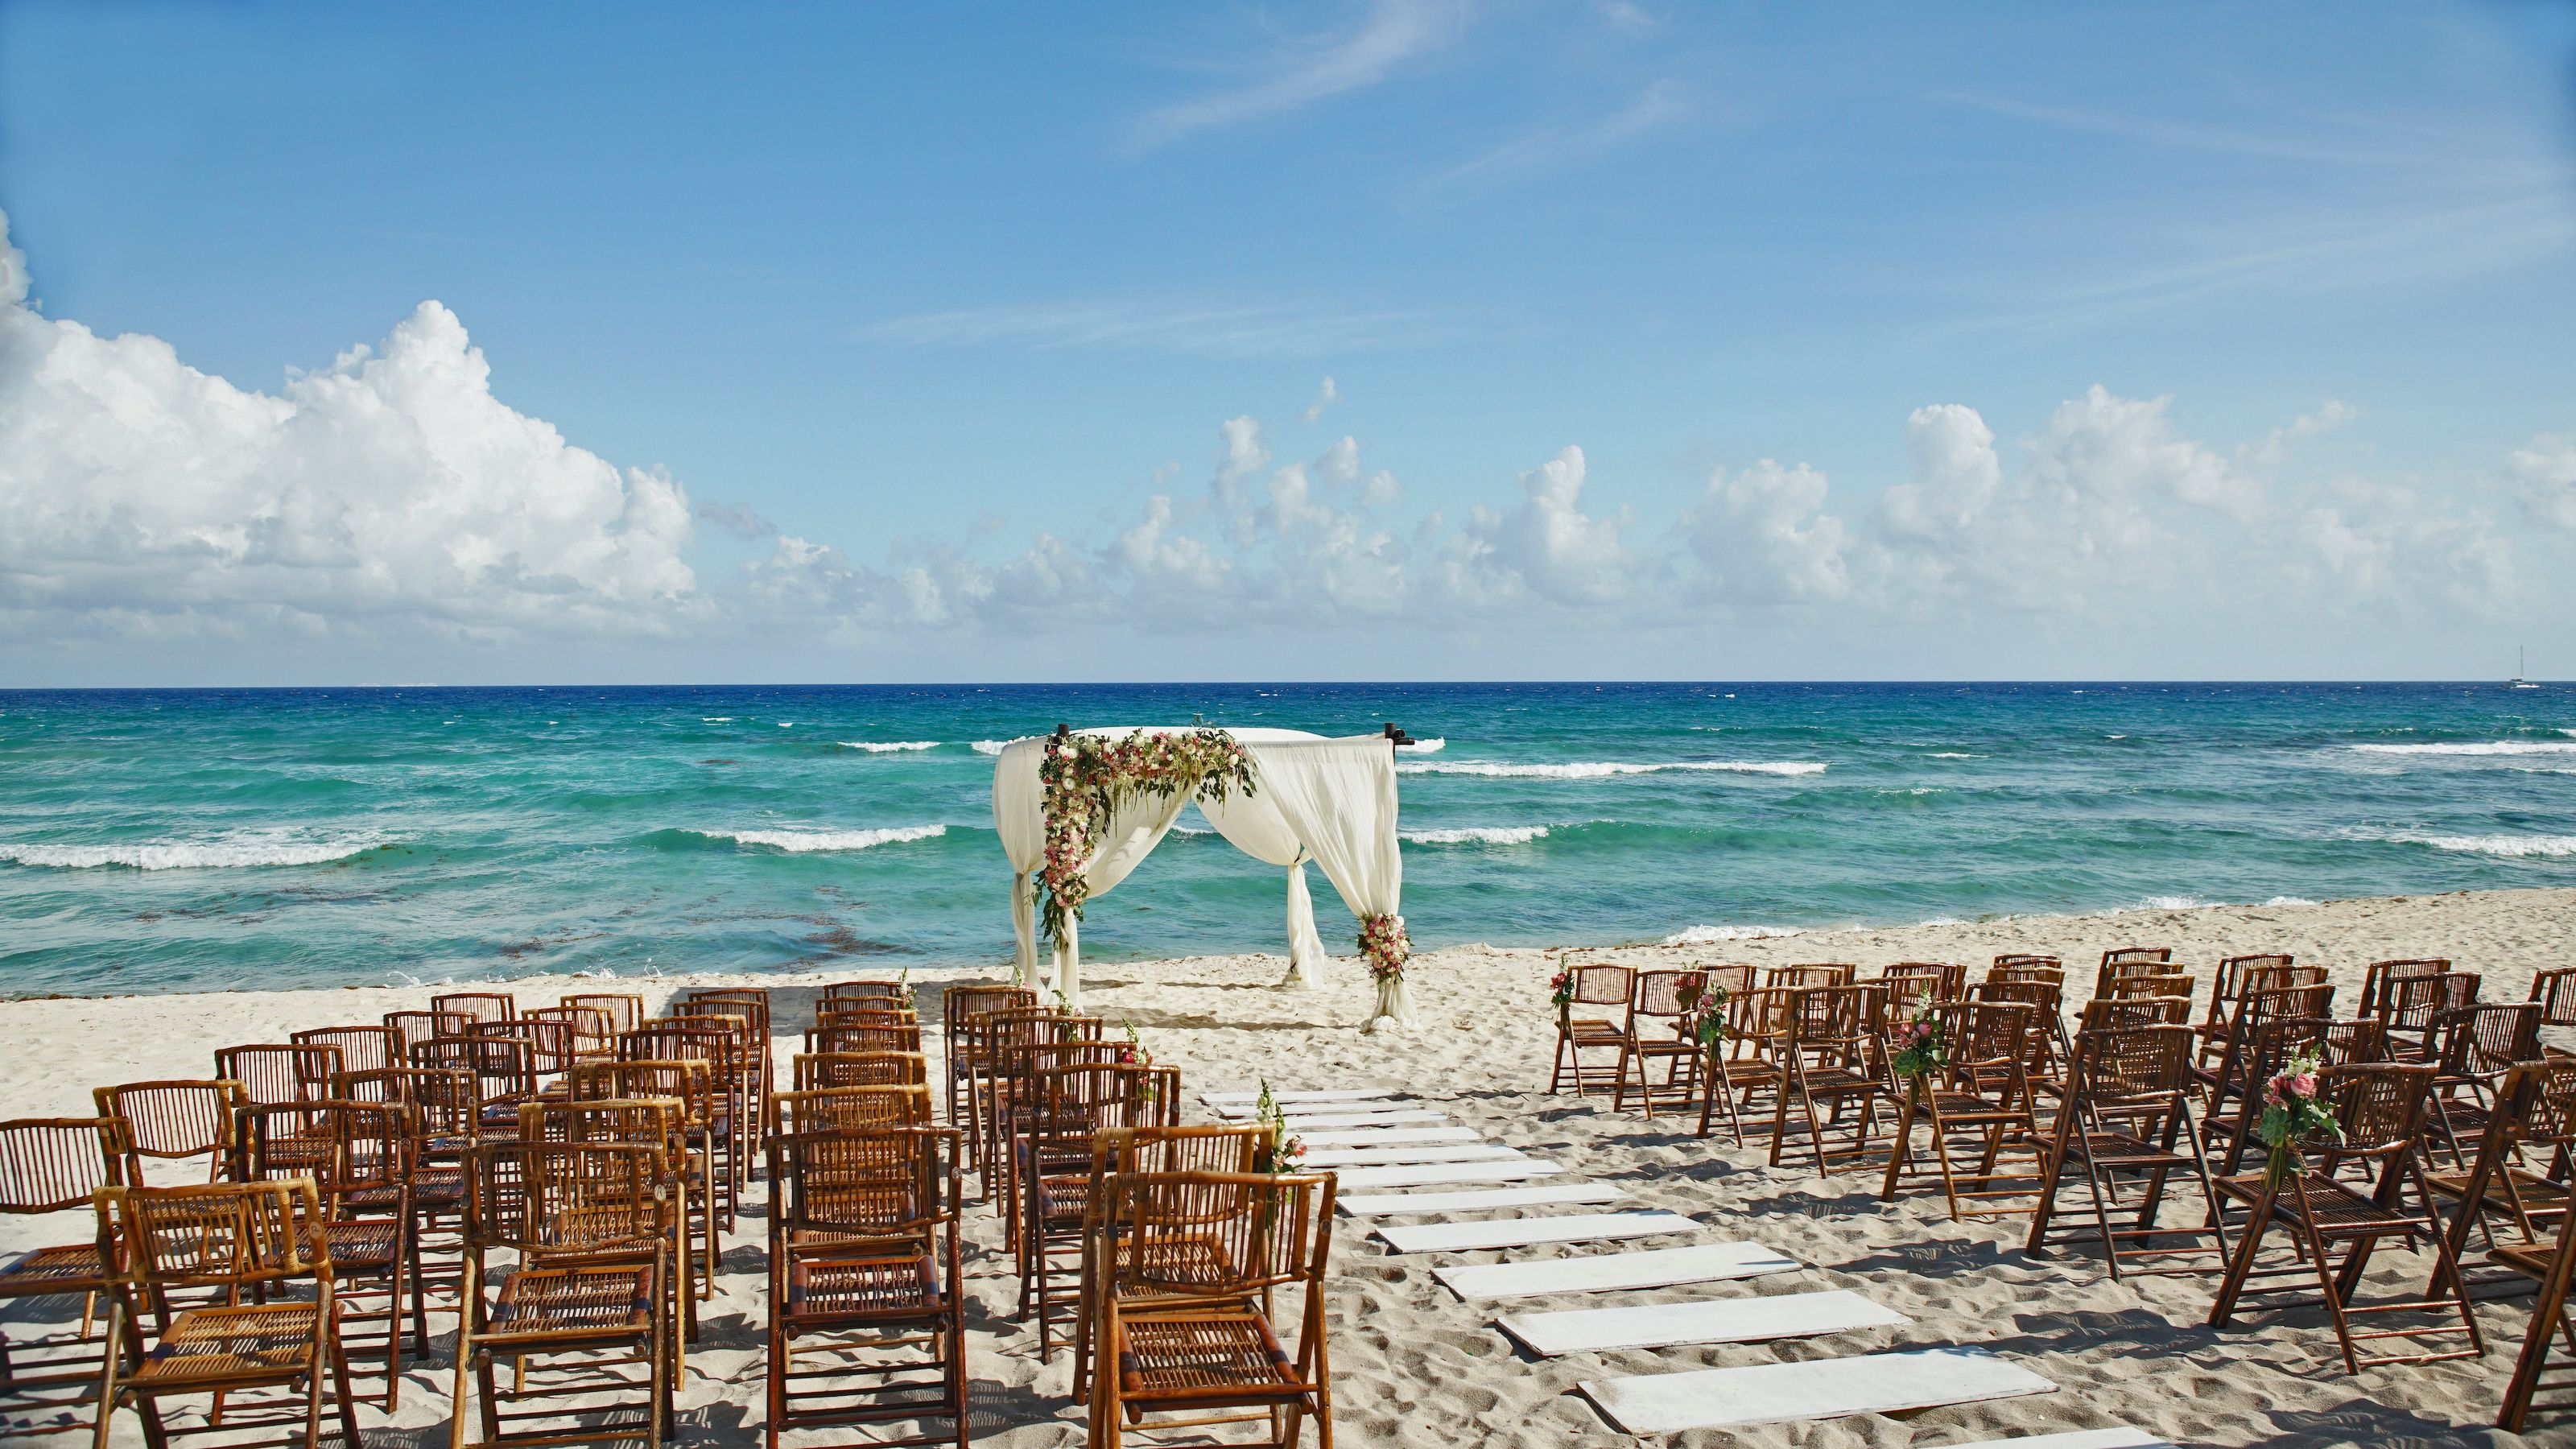 https://media.cnn.com/api/v1/images/stellar/prod/underscored-when-to-book-destination-wedding-flight-lead-beach-wedding.jpg?c=16x9